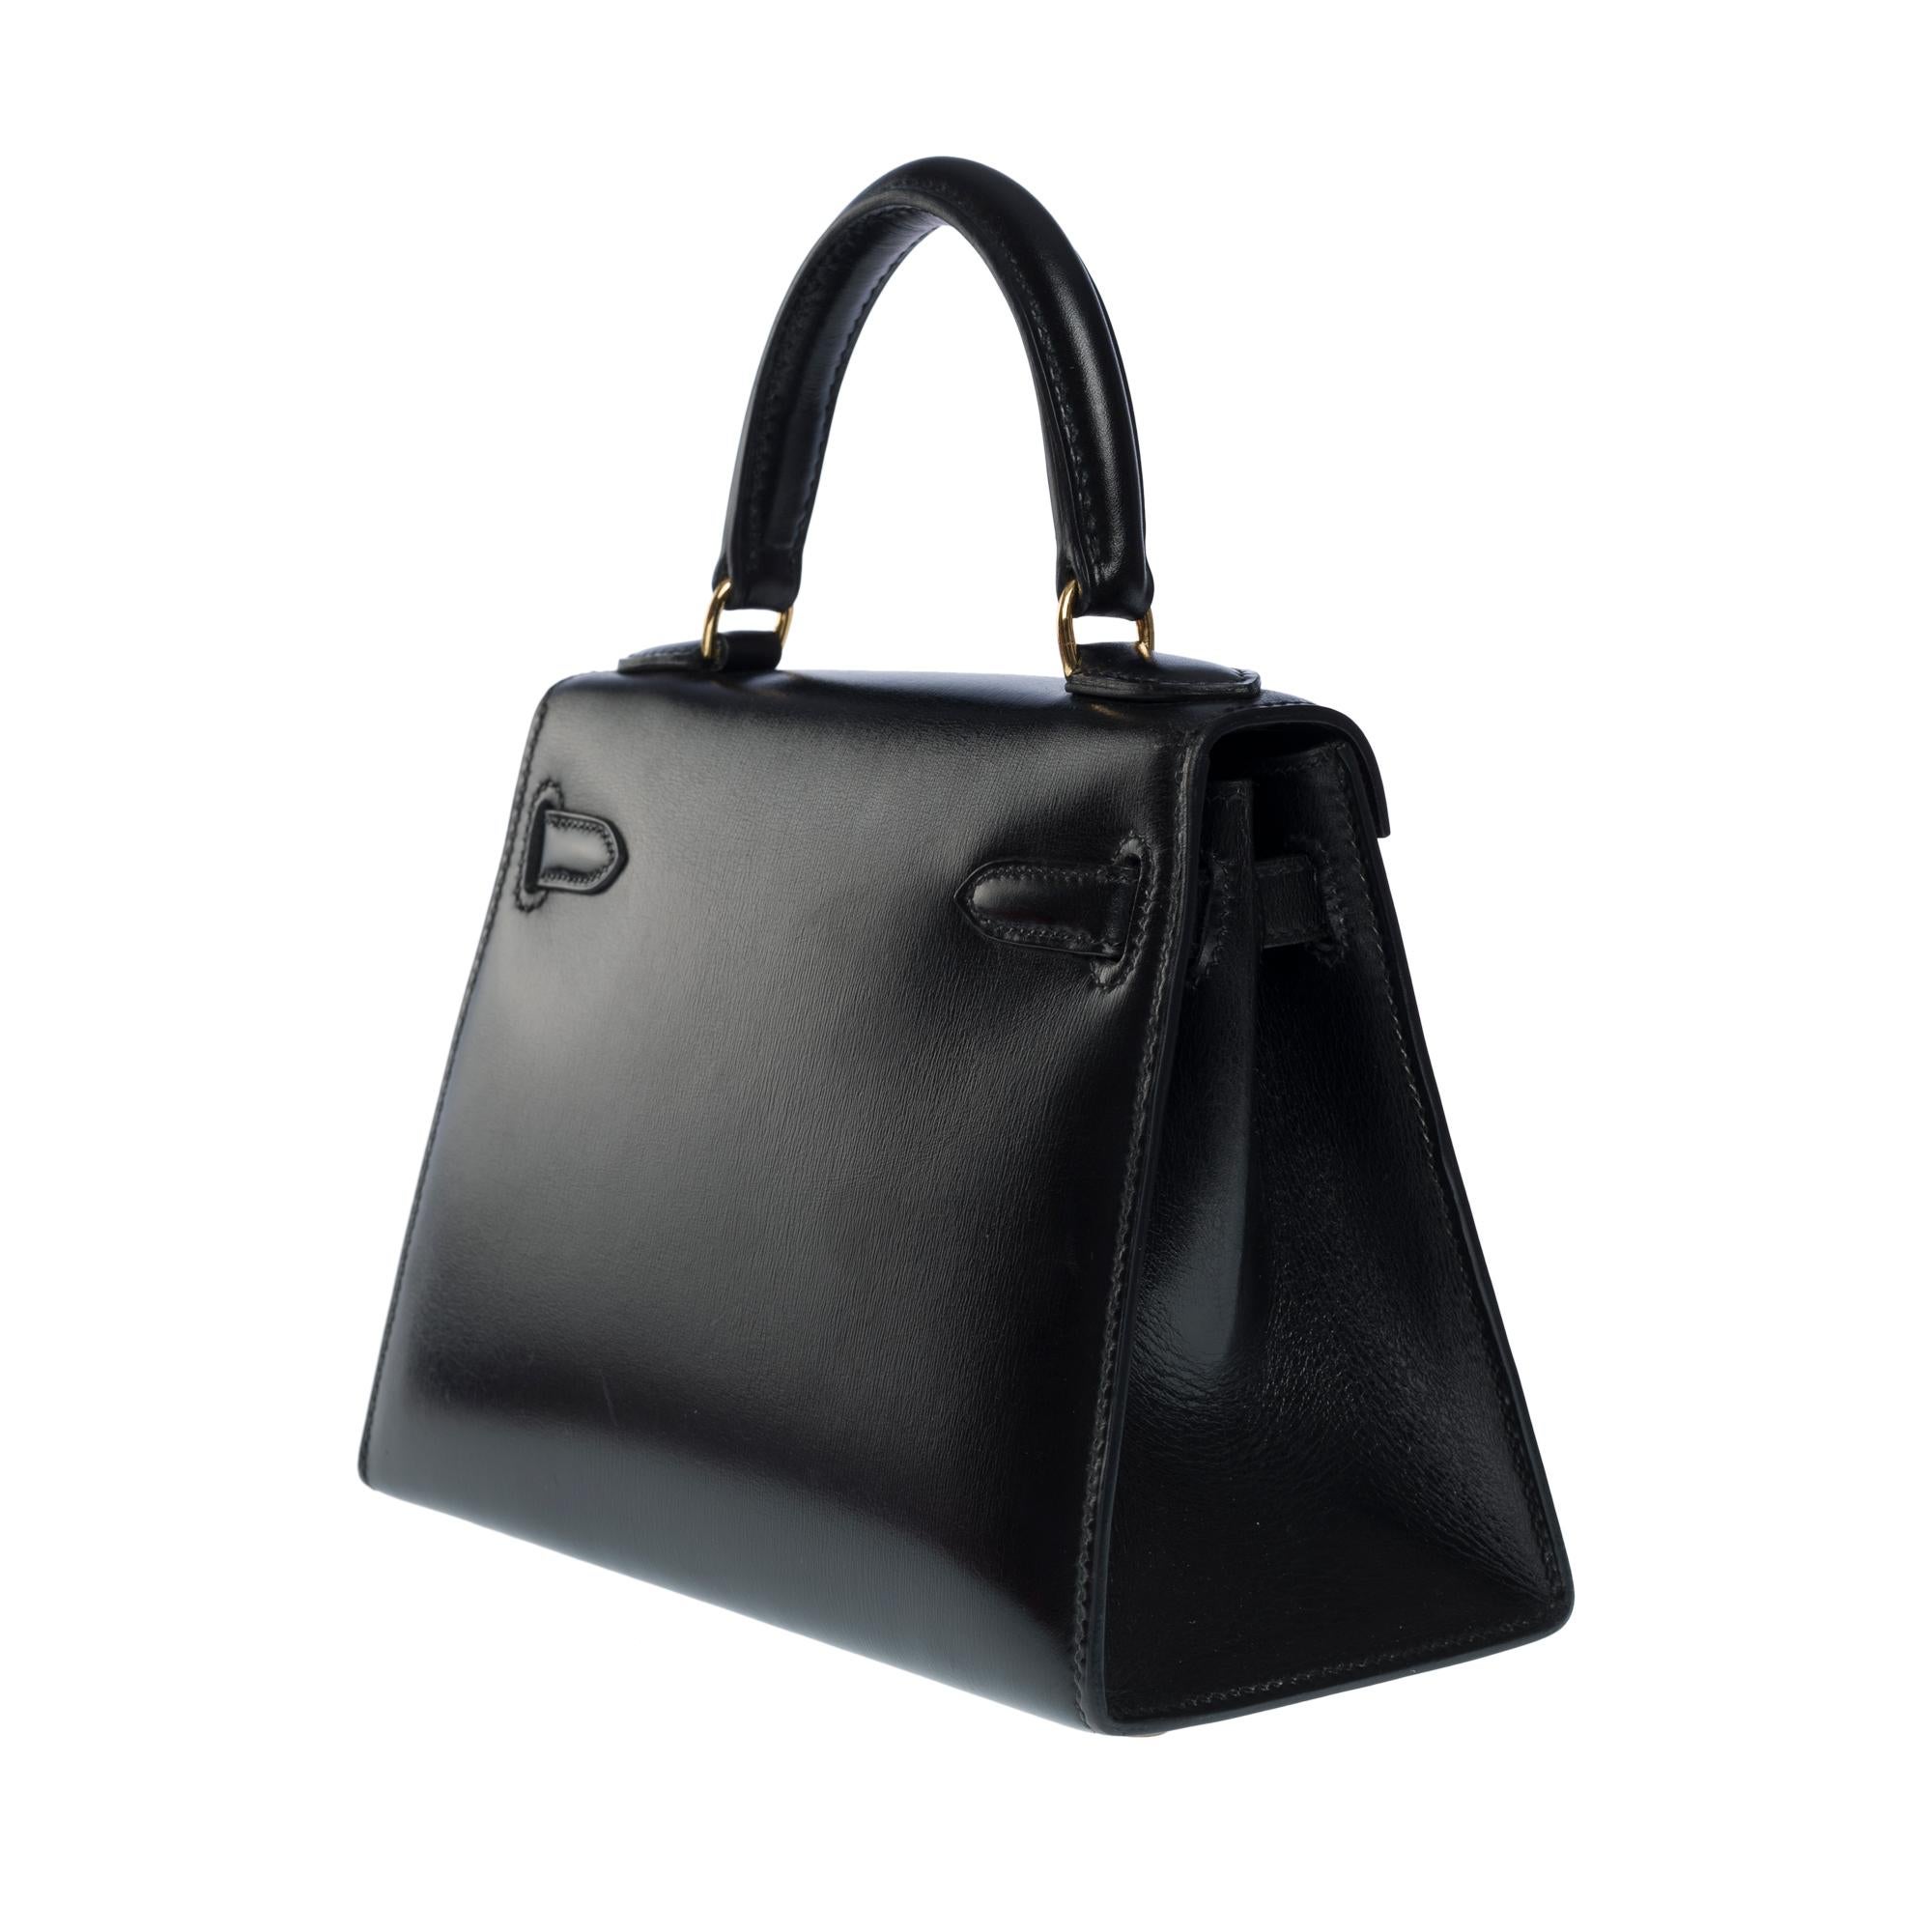 Black Rare Hermès Mini Kelly 20cm handbag double strap in black box calfskin, GHW